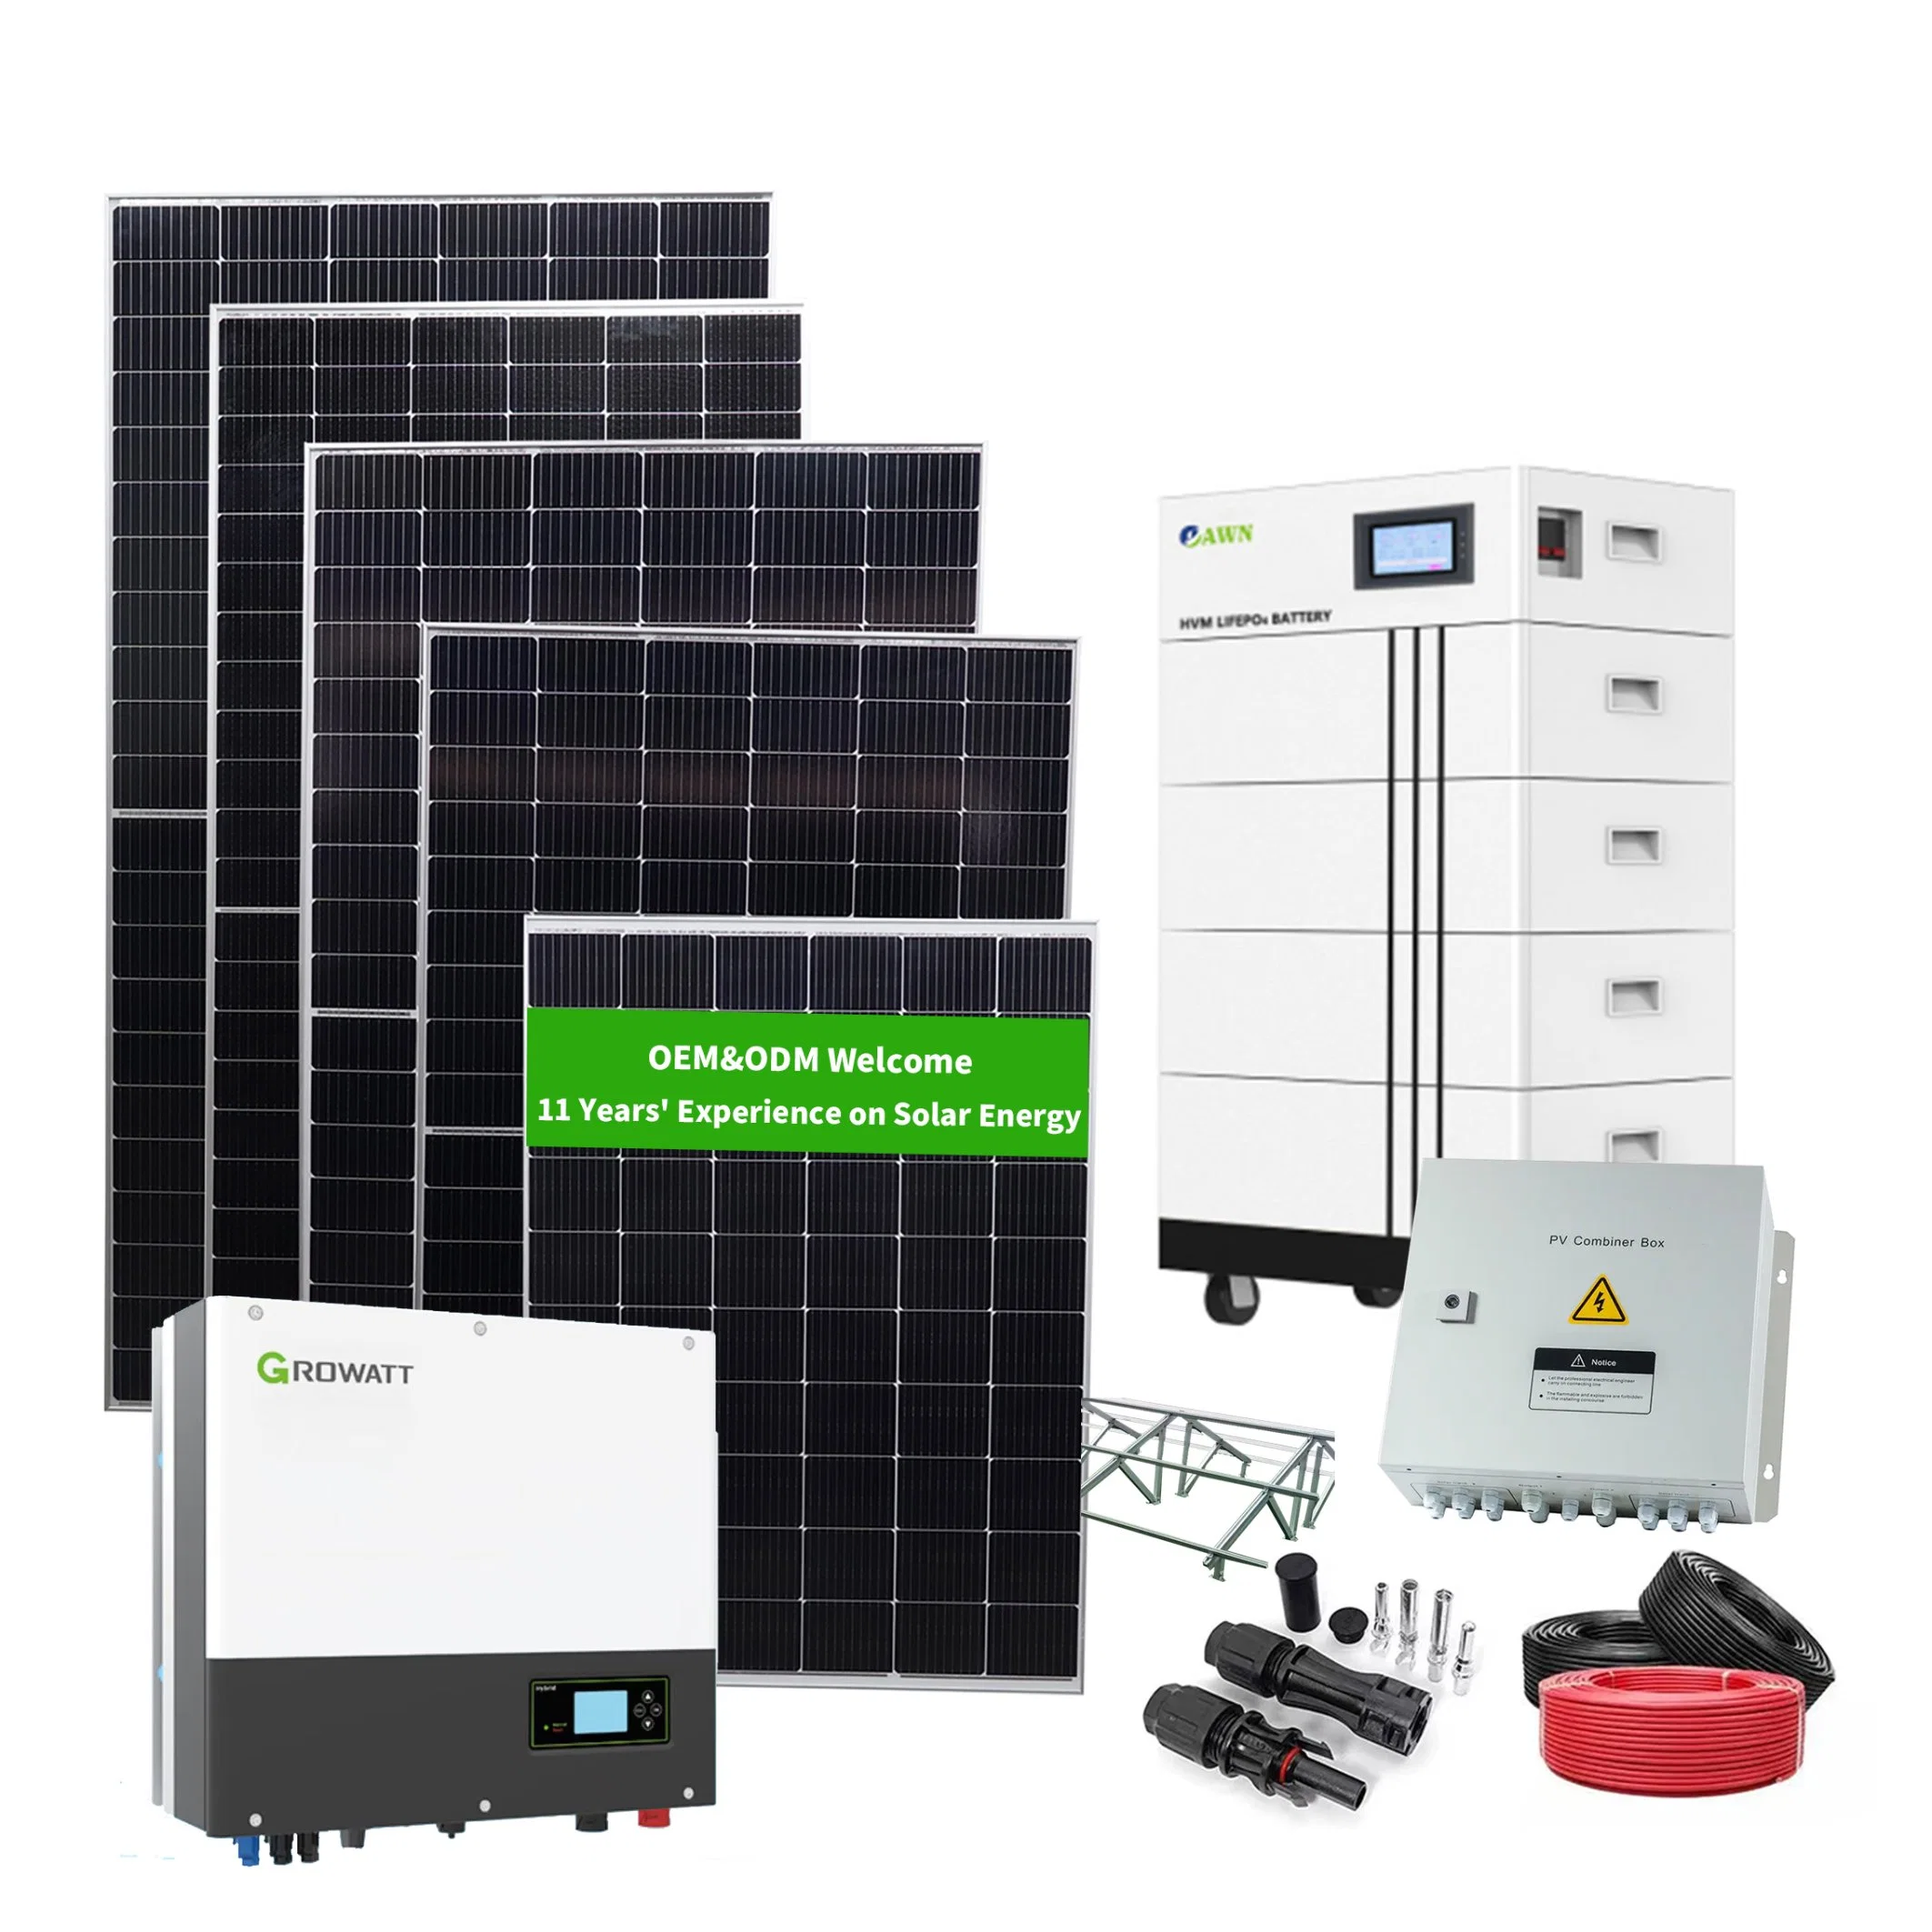 3kw 5kw 8kw 10kw 15kw 20kw 30kw Complete Kits Set PV Module Panel Energy Storage Byhrid on Grid Home Inverter Solar Power System